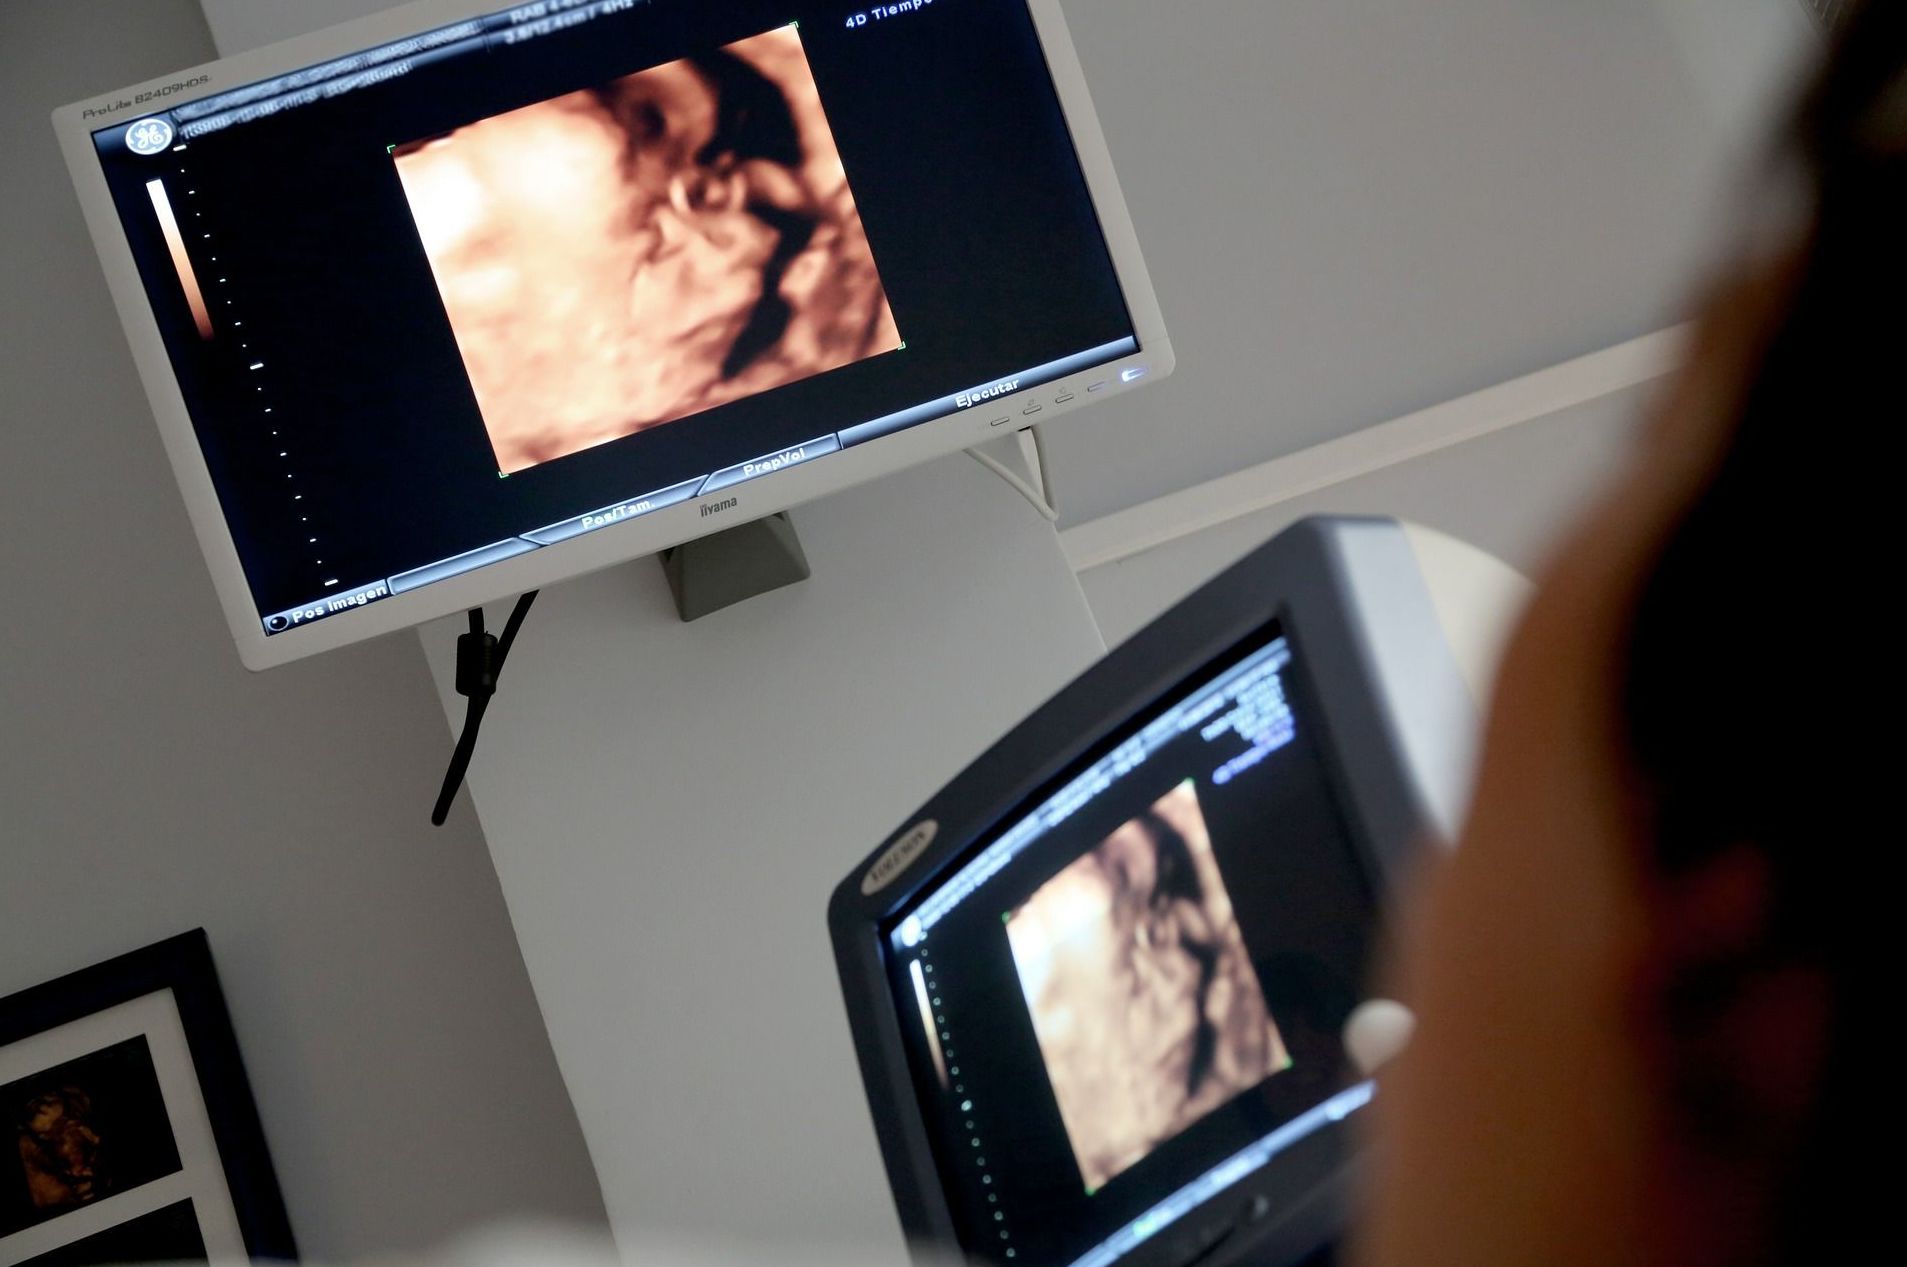 Diagnóstrico prenatal en Palencia